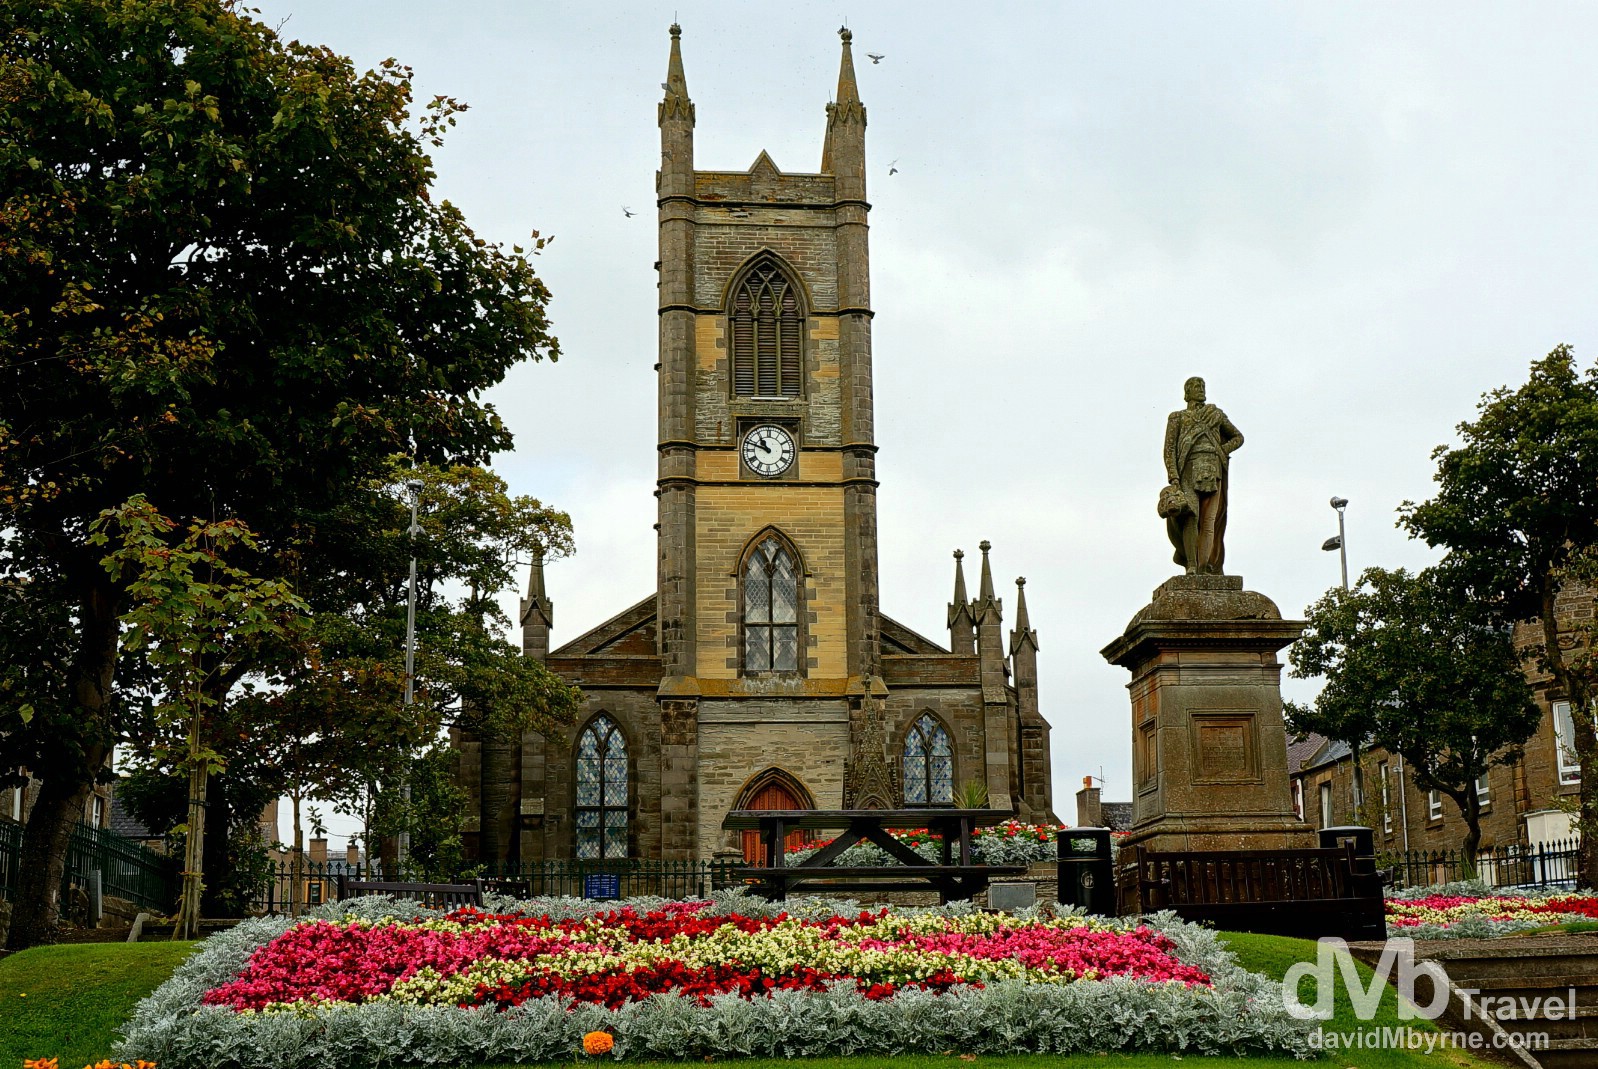 St. Peter's & St. Andrew's Church overlooking Sir John Square in Thurso, Caithness, Highland, Scotland. September 15, 2014.